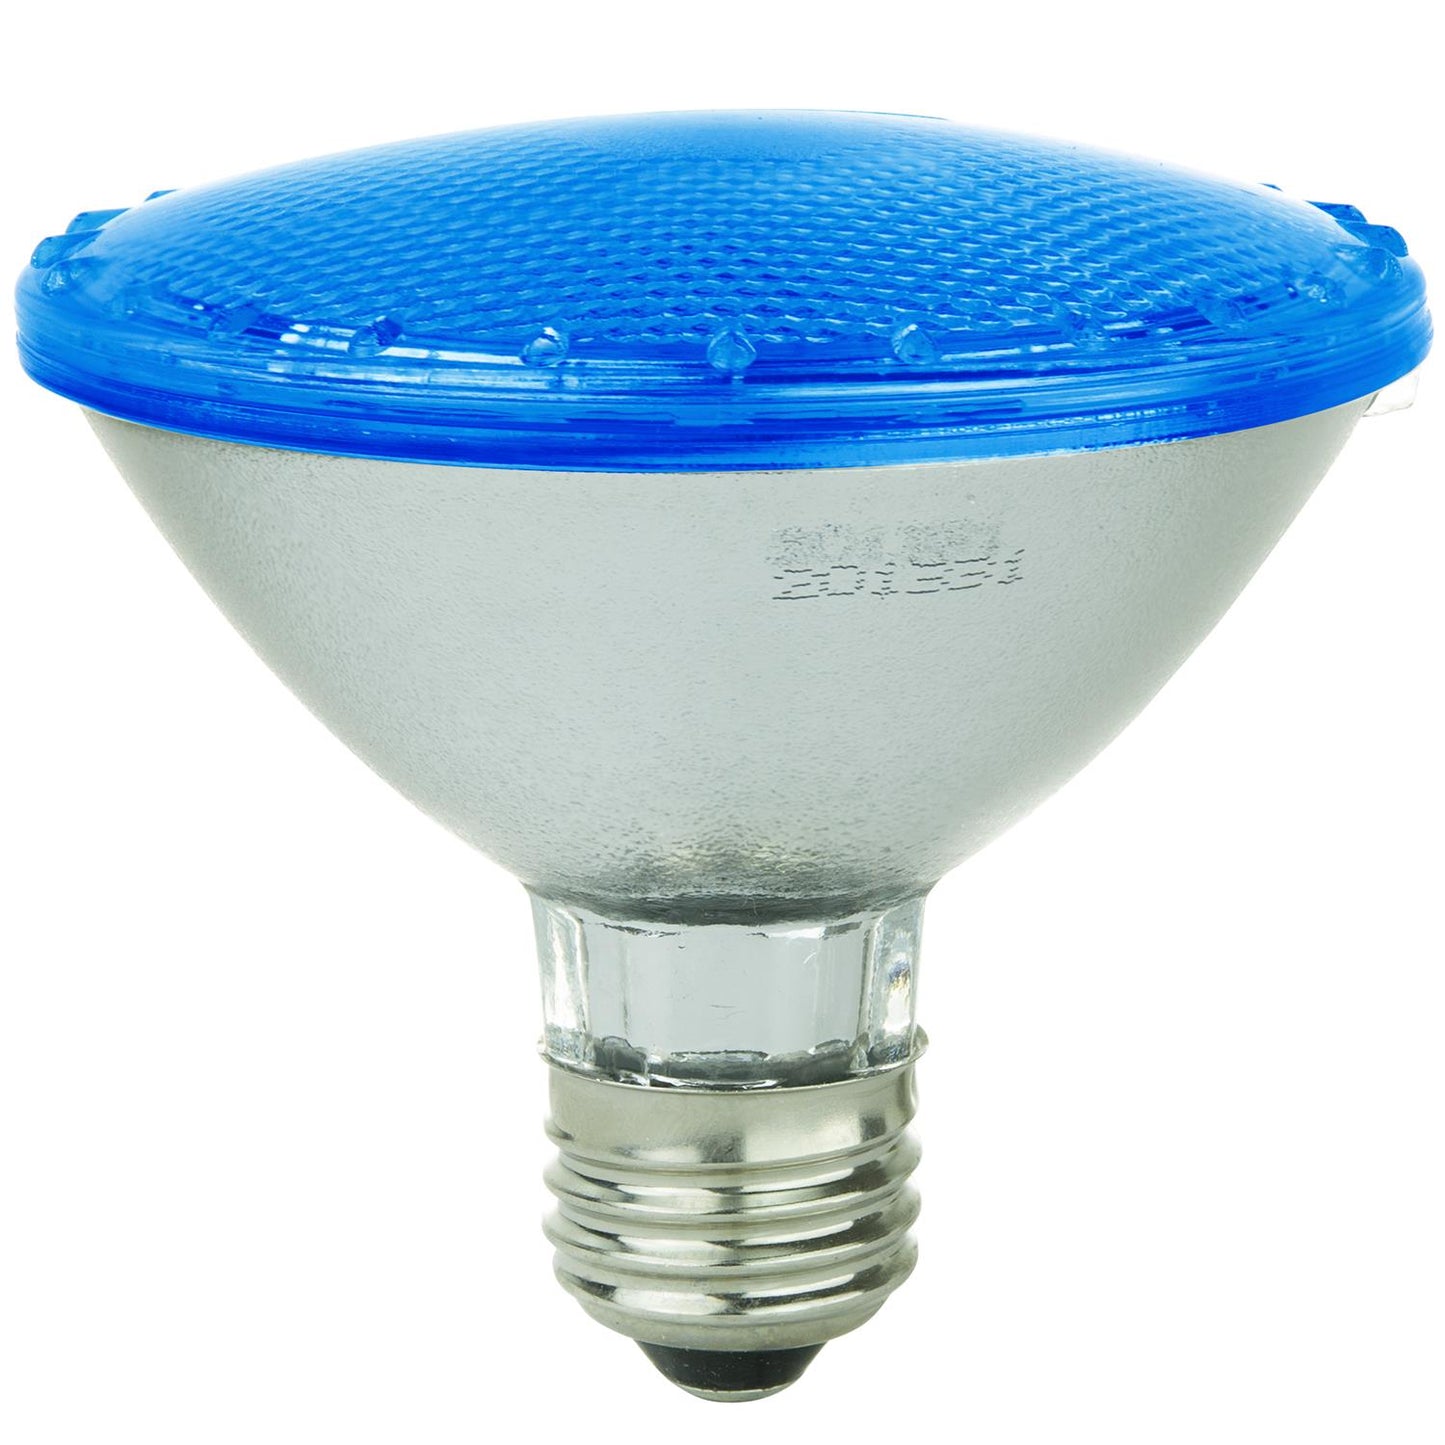 Sunlite LED PAR30 Colored Reflector 4W Light Bulb Medium (E26) Base, Blue